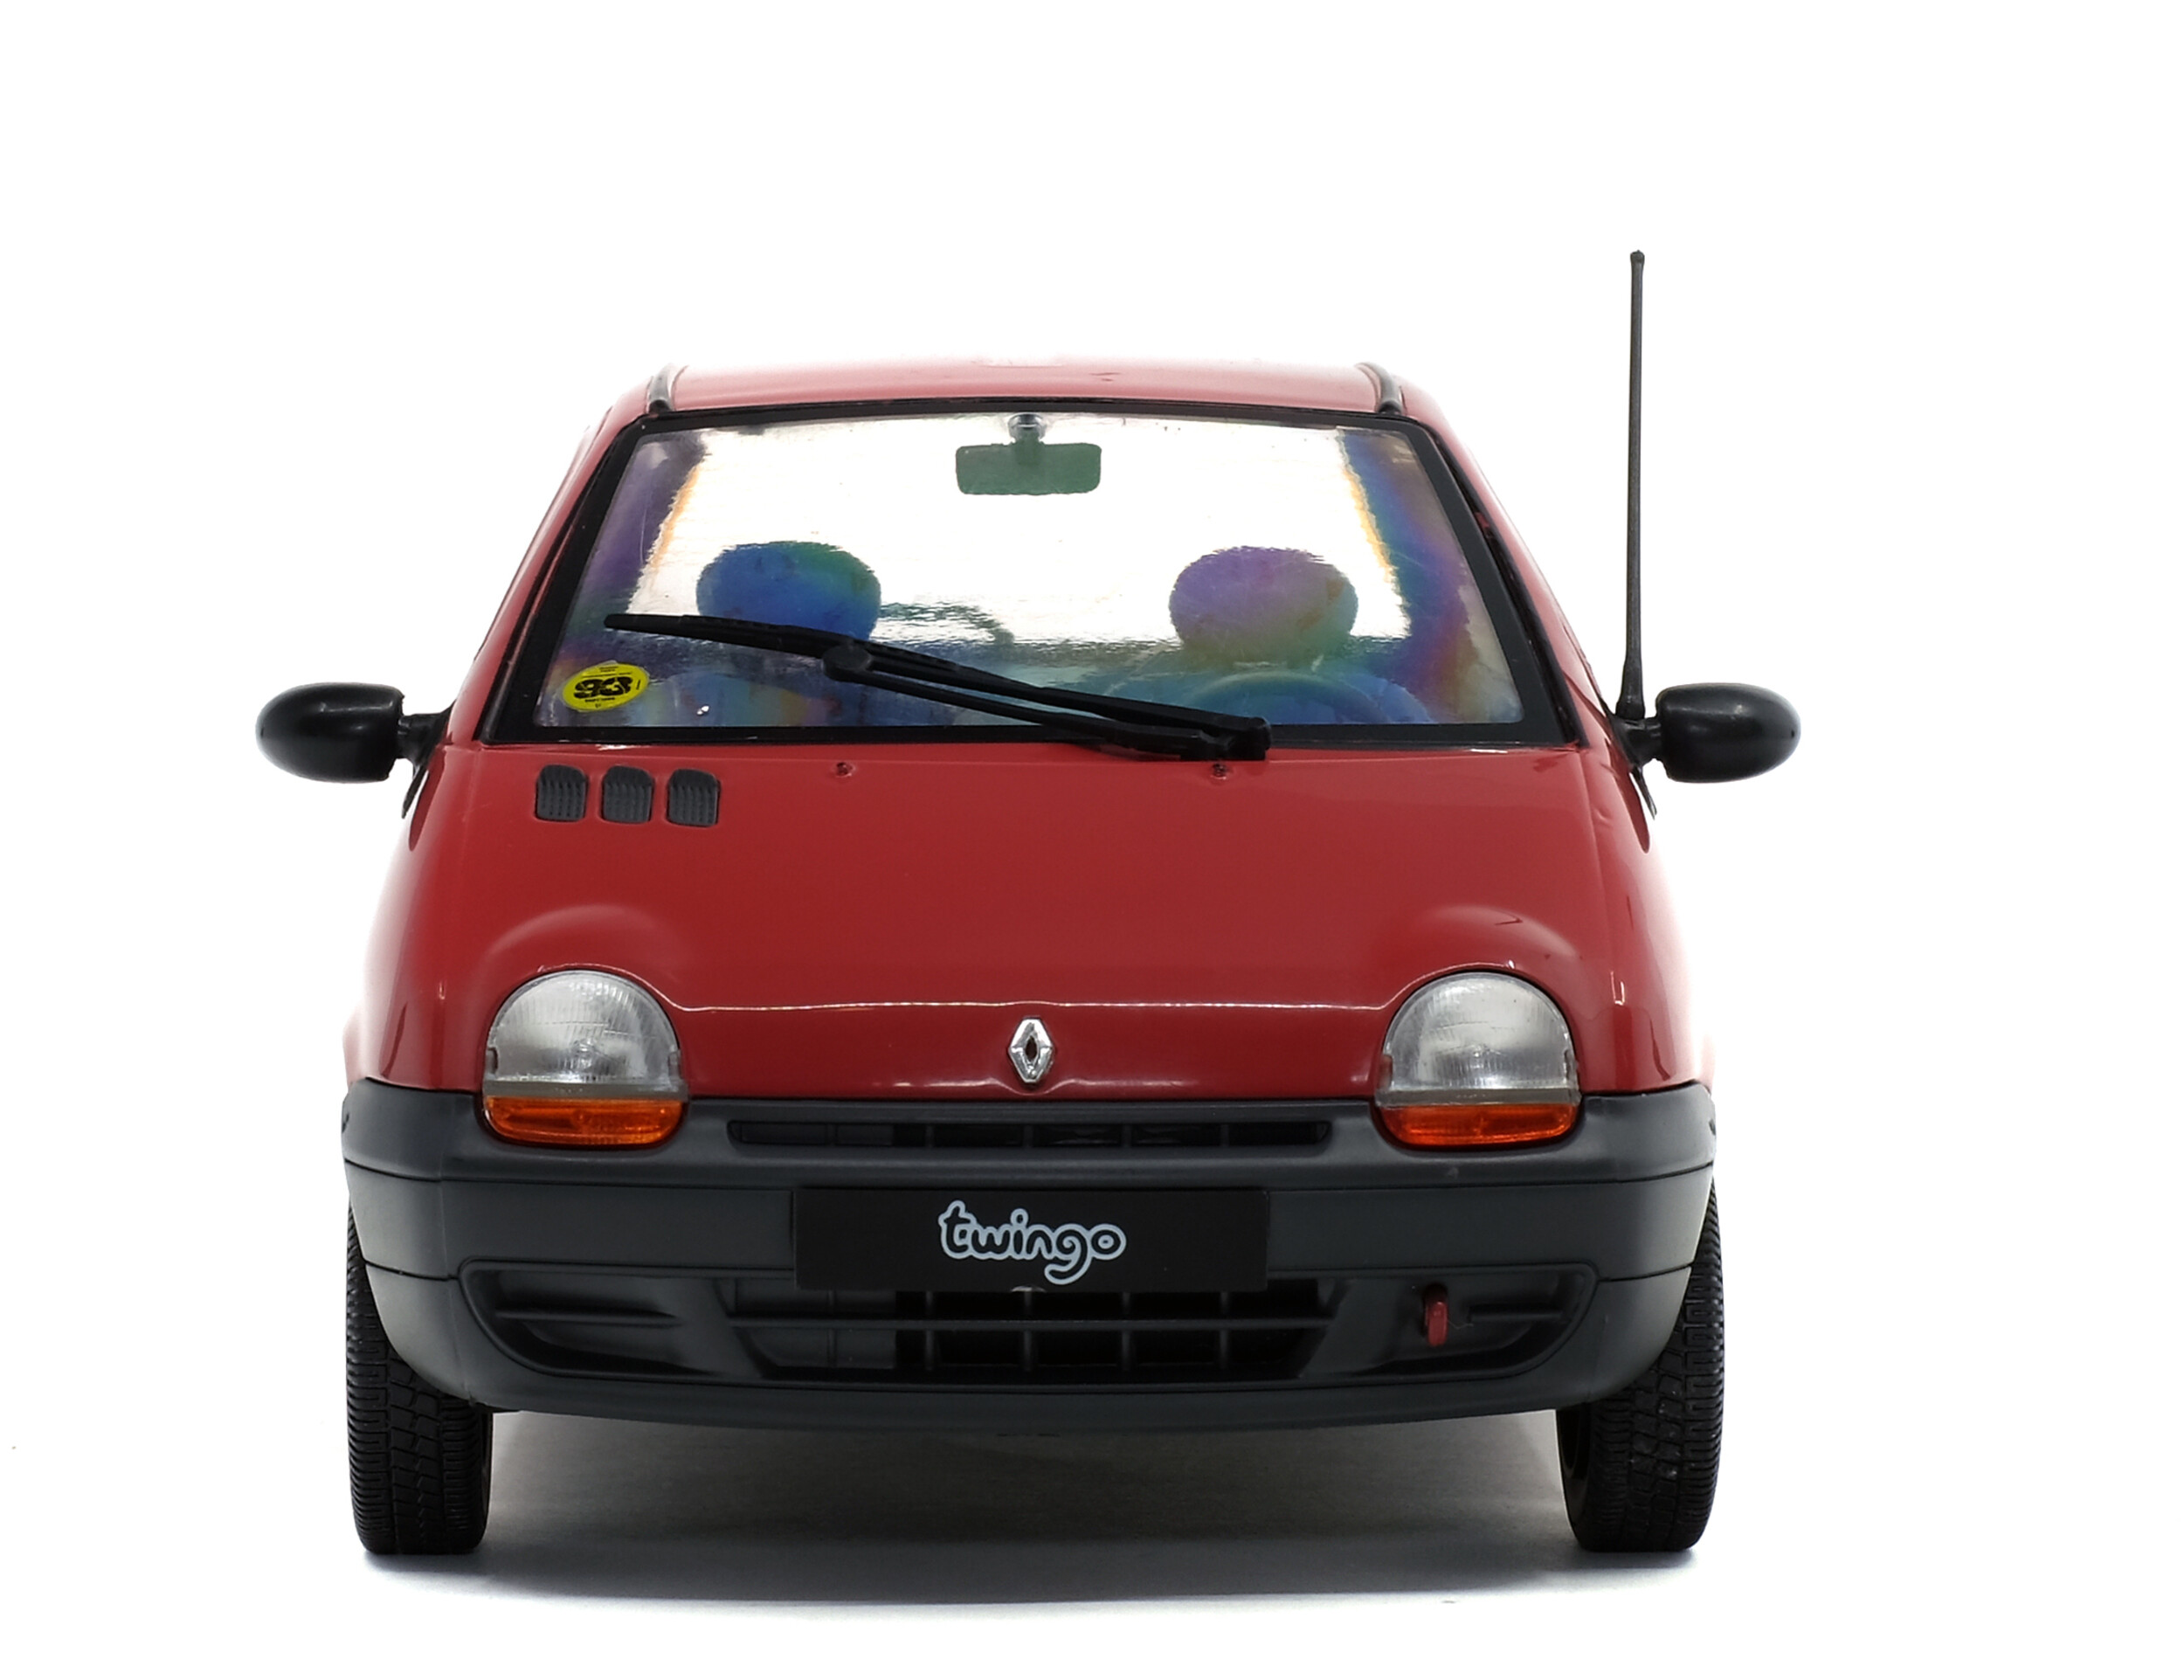 Renault Twingo 1993 rouge (Solido) 1/18e - Minicarweb